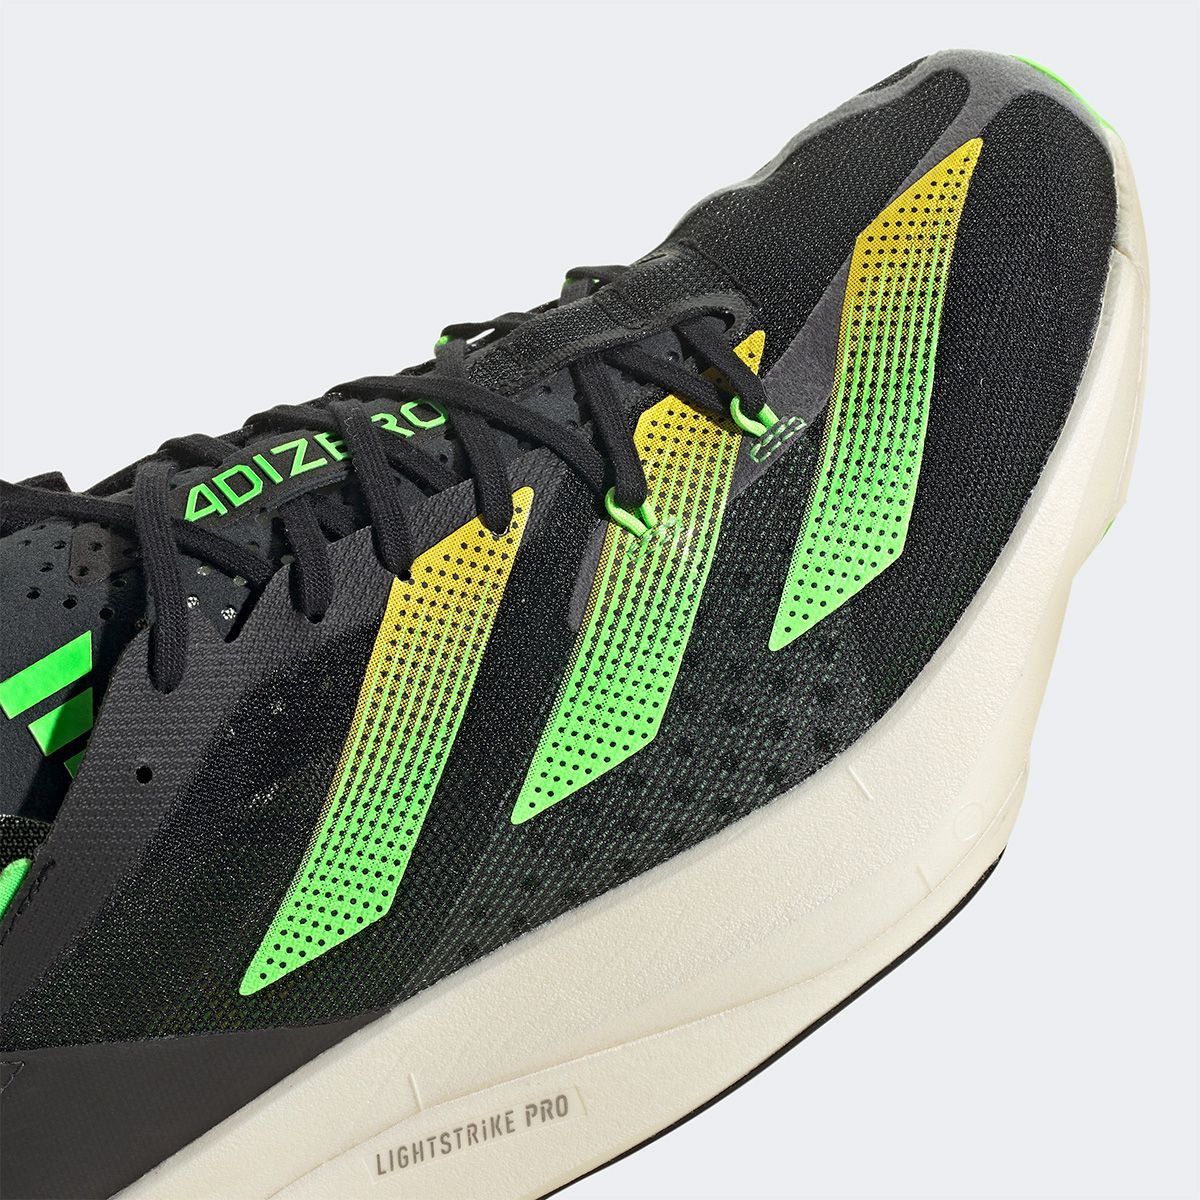 The adidas Adizero Adios Pro 3 Debuts June 23 | LaptrinhX / News